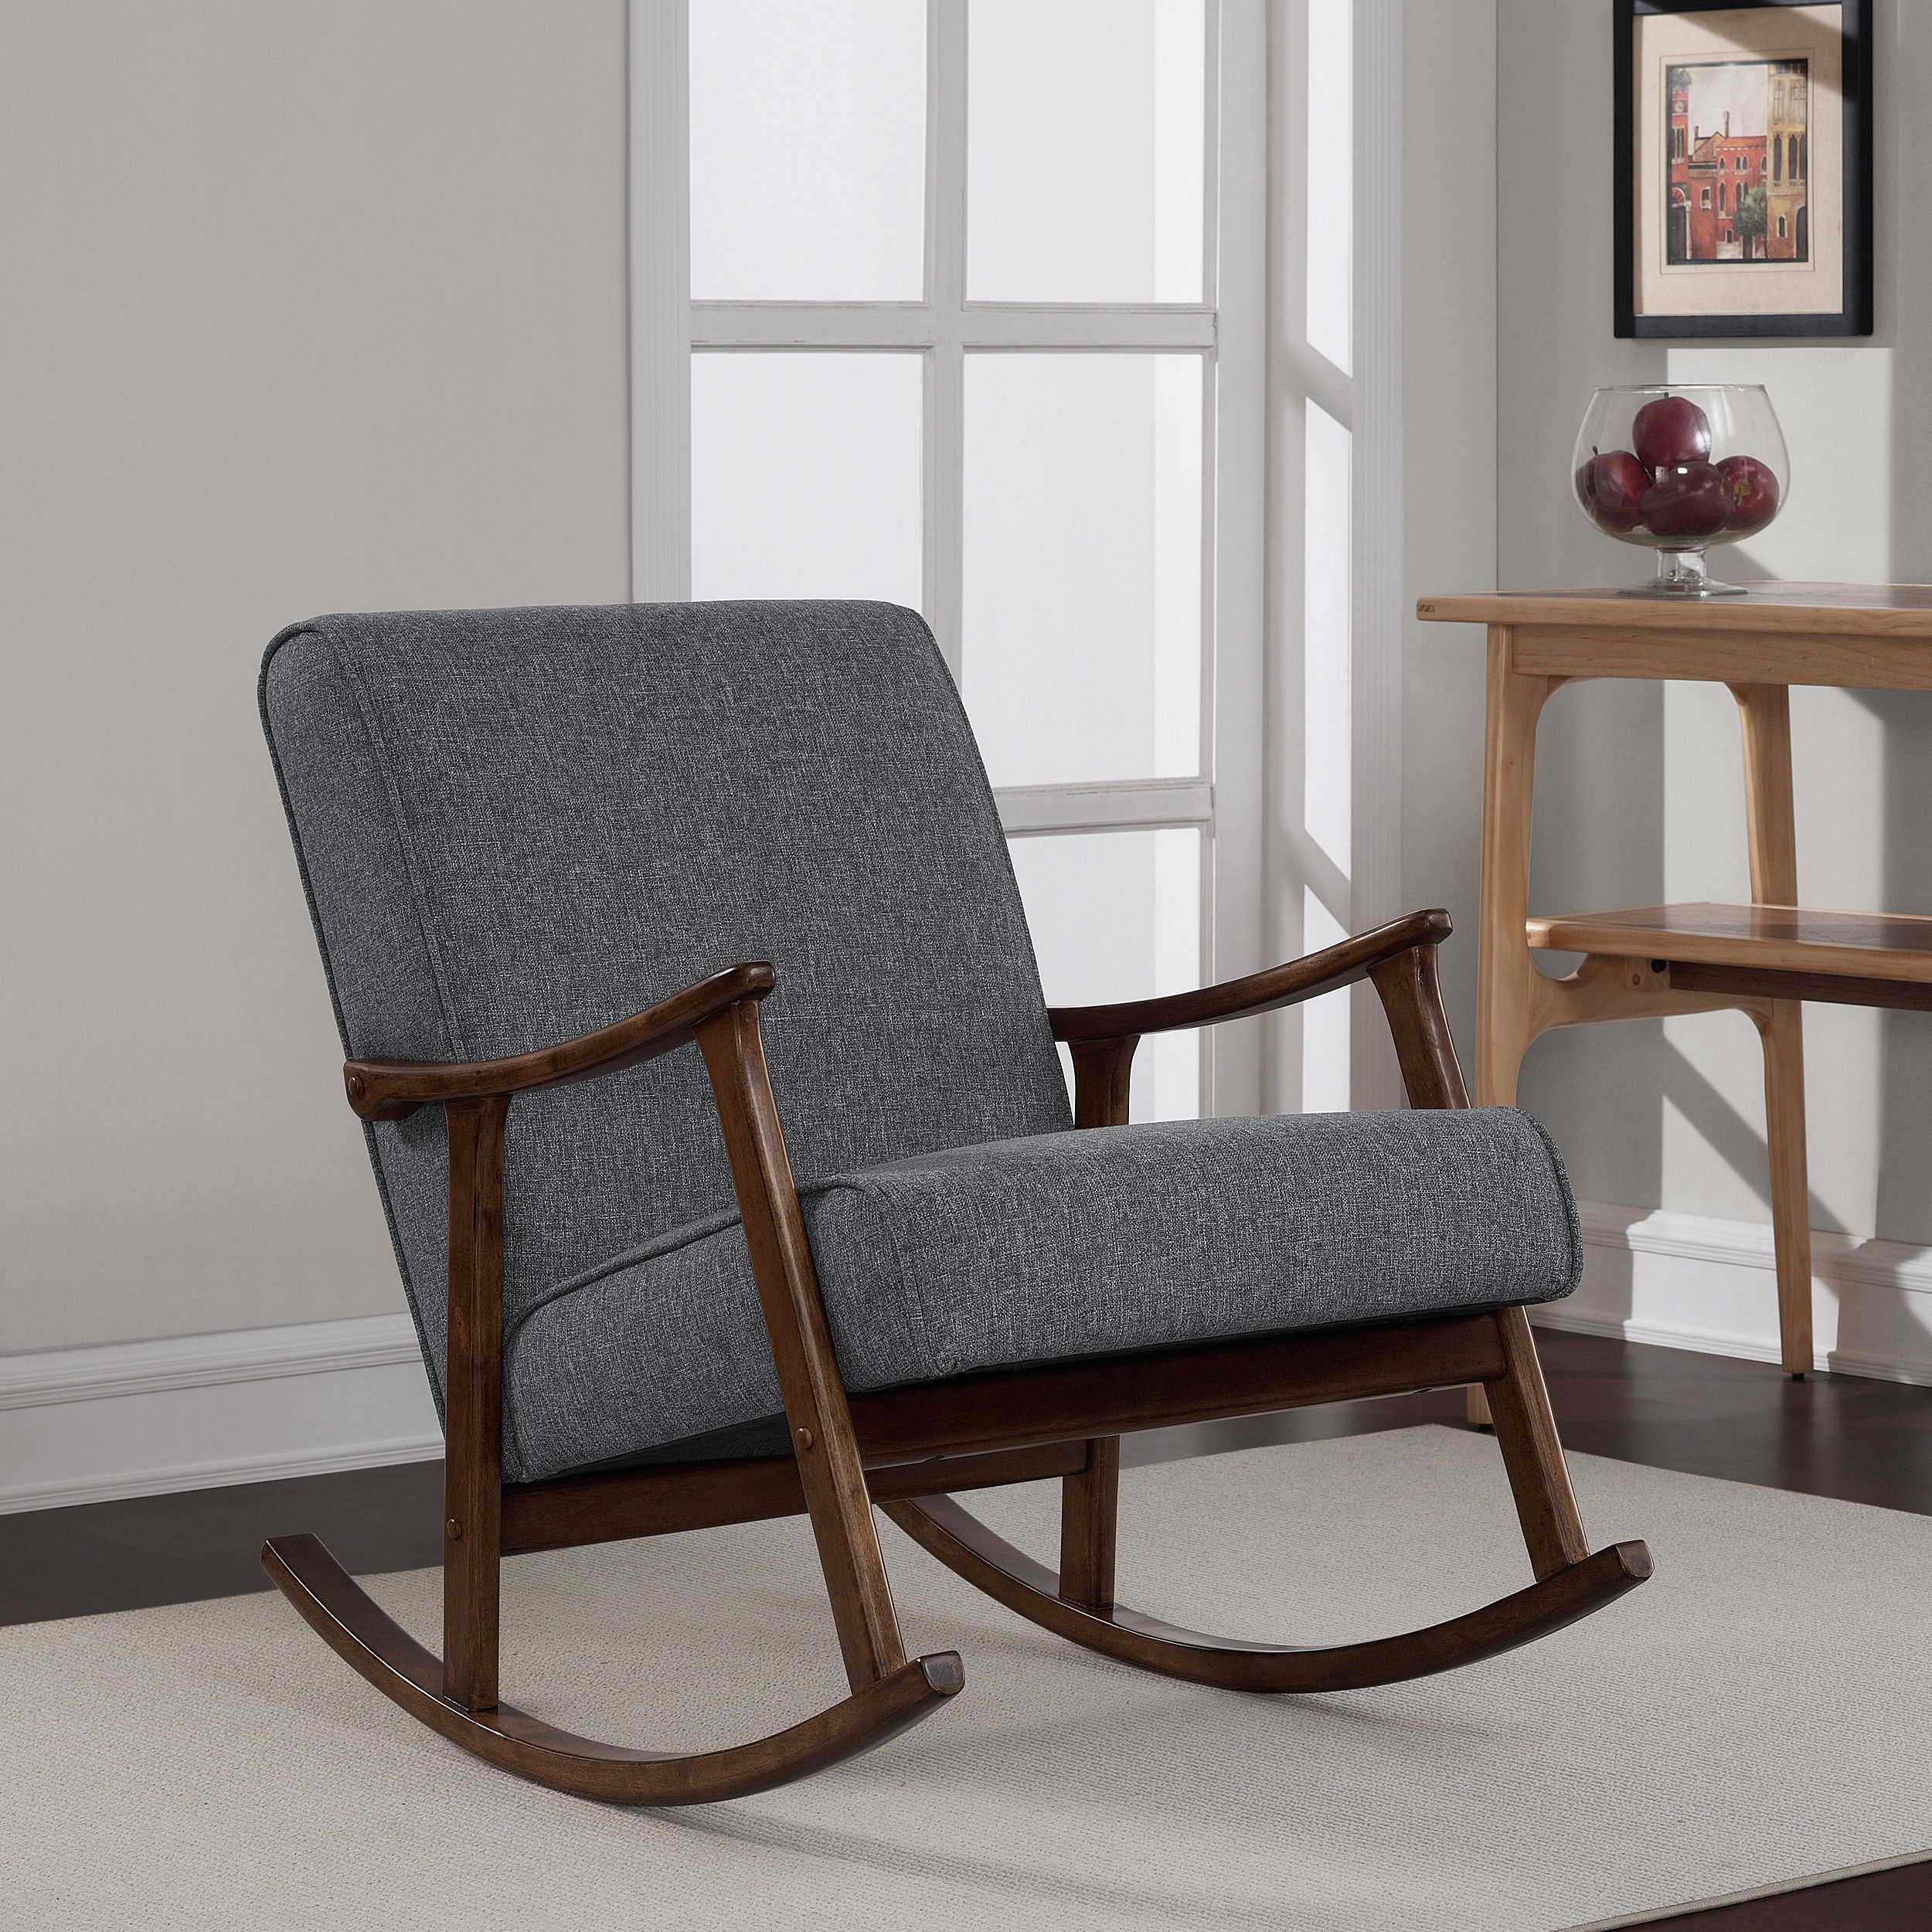 Carson Carrington Granite Grey Fabric Mid Century Wooden With Regard To Granite Grey Fabric Mid Century Wooden Rocking Chairs (Photo 7 of 20)